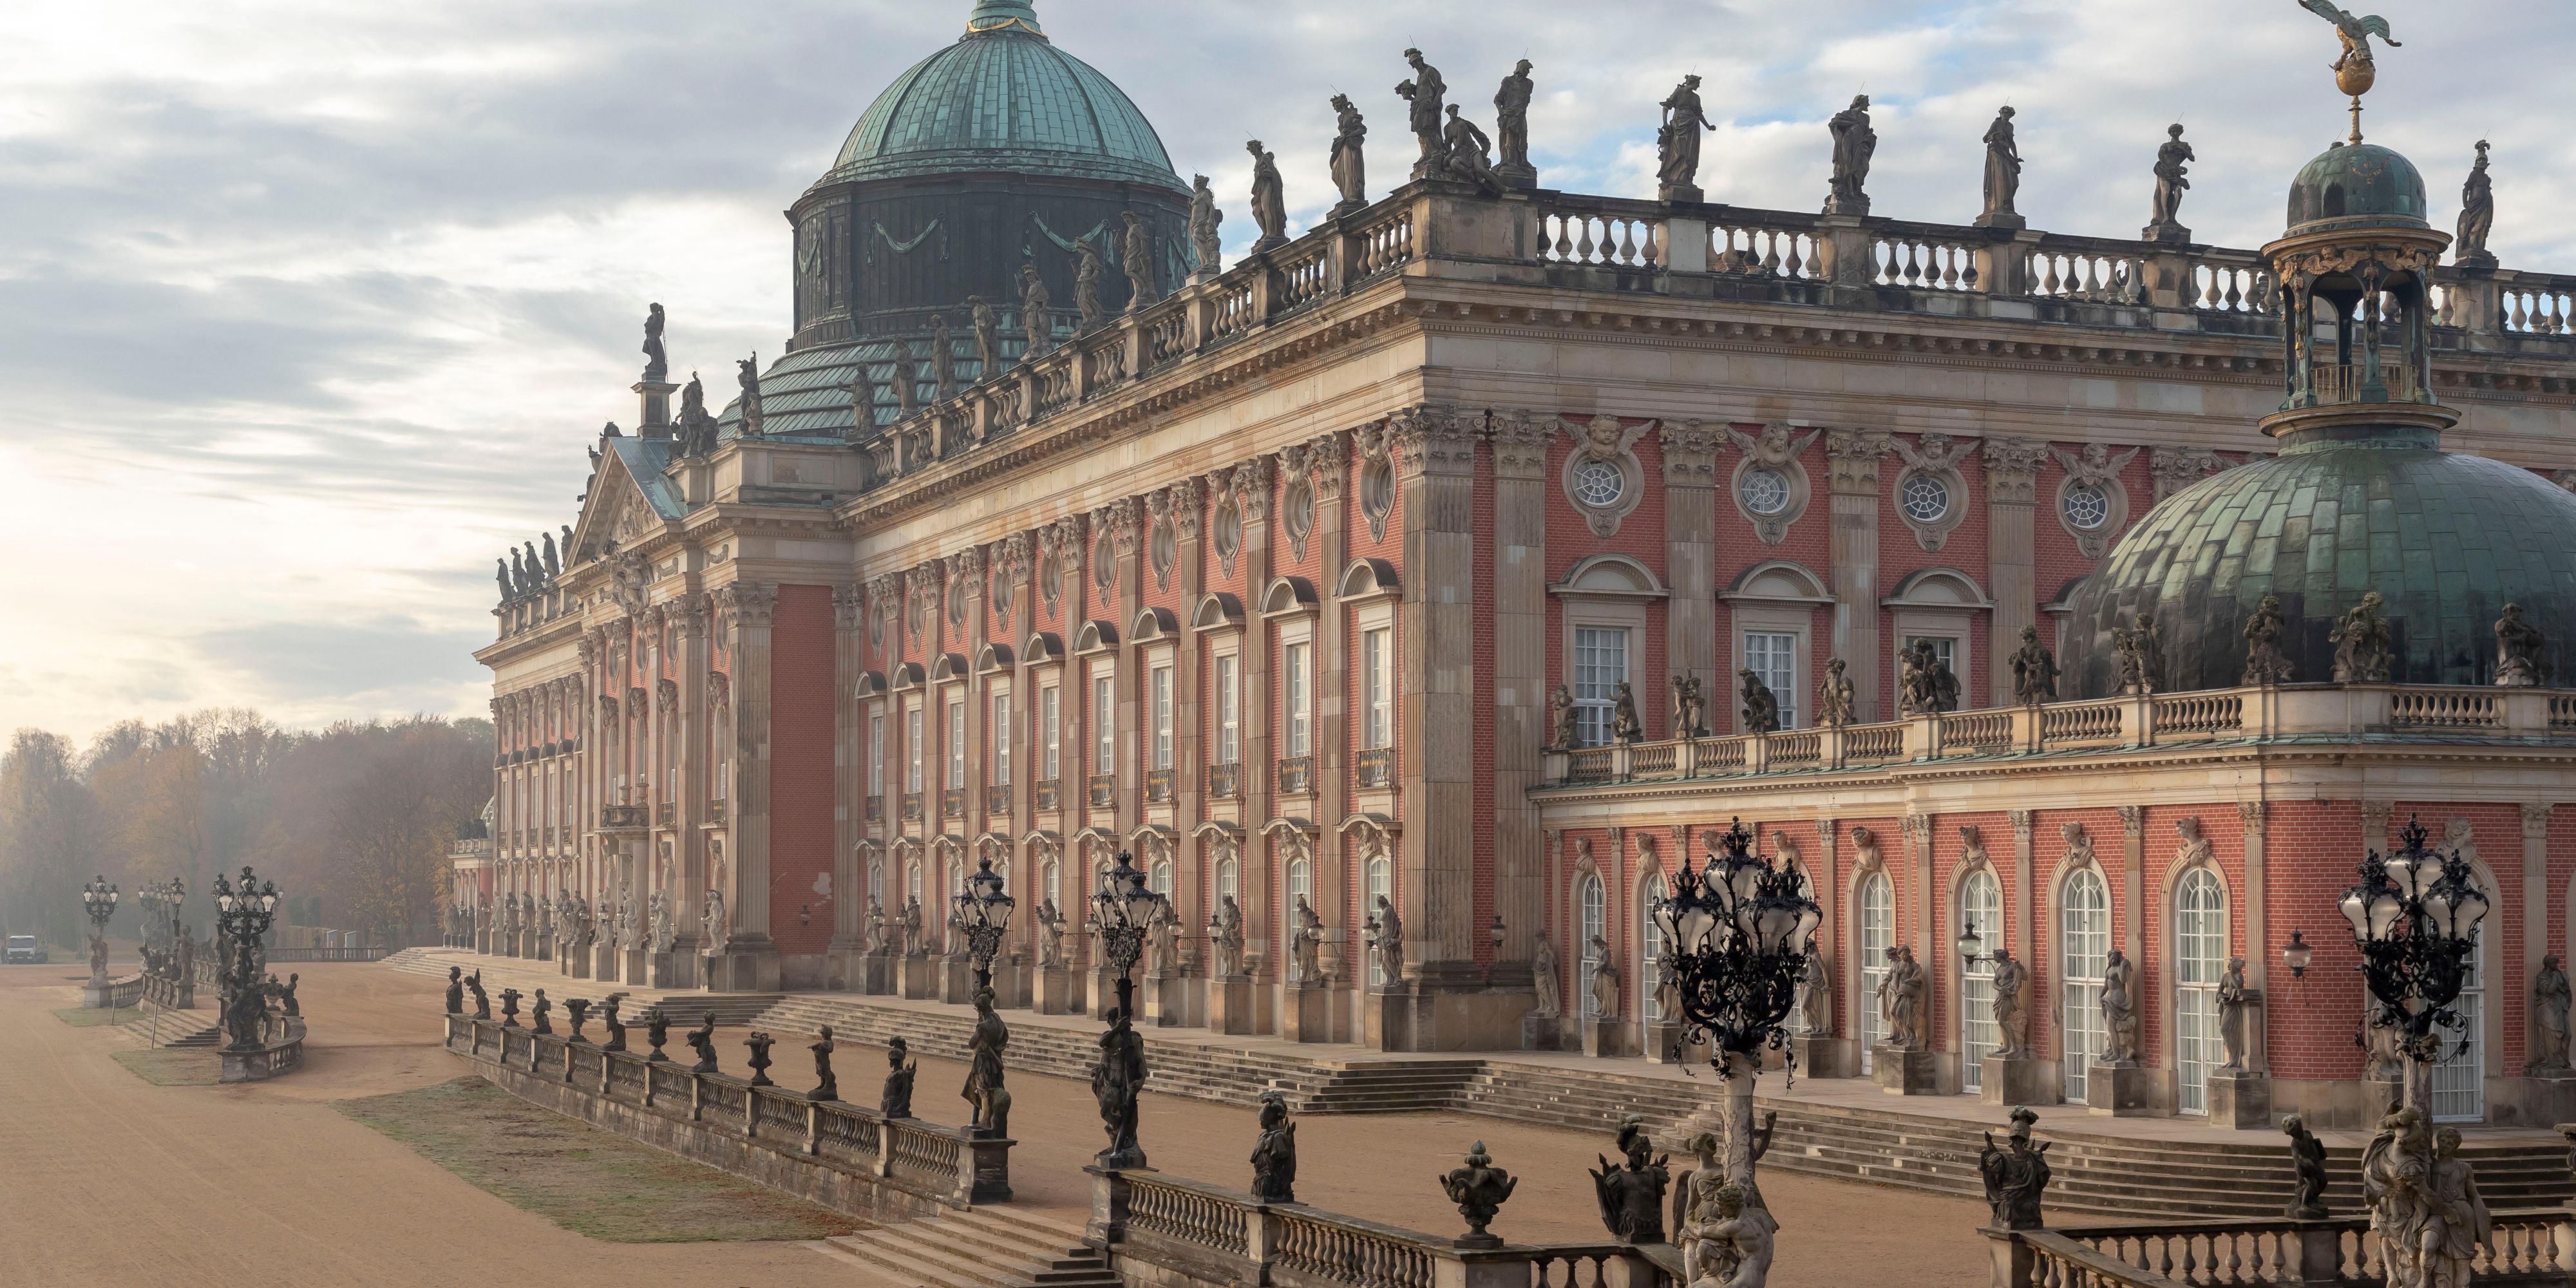 Visit the wonderful Castles of Potsdam like Sanssouci, Orangerie or the Castle of Babelsberg!